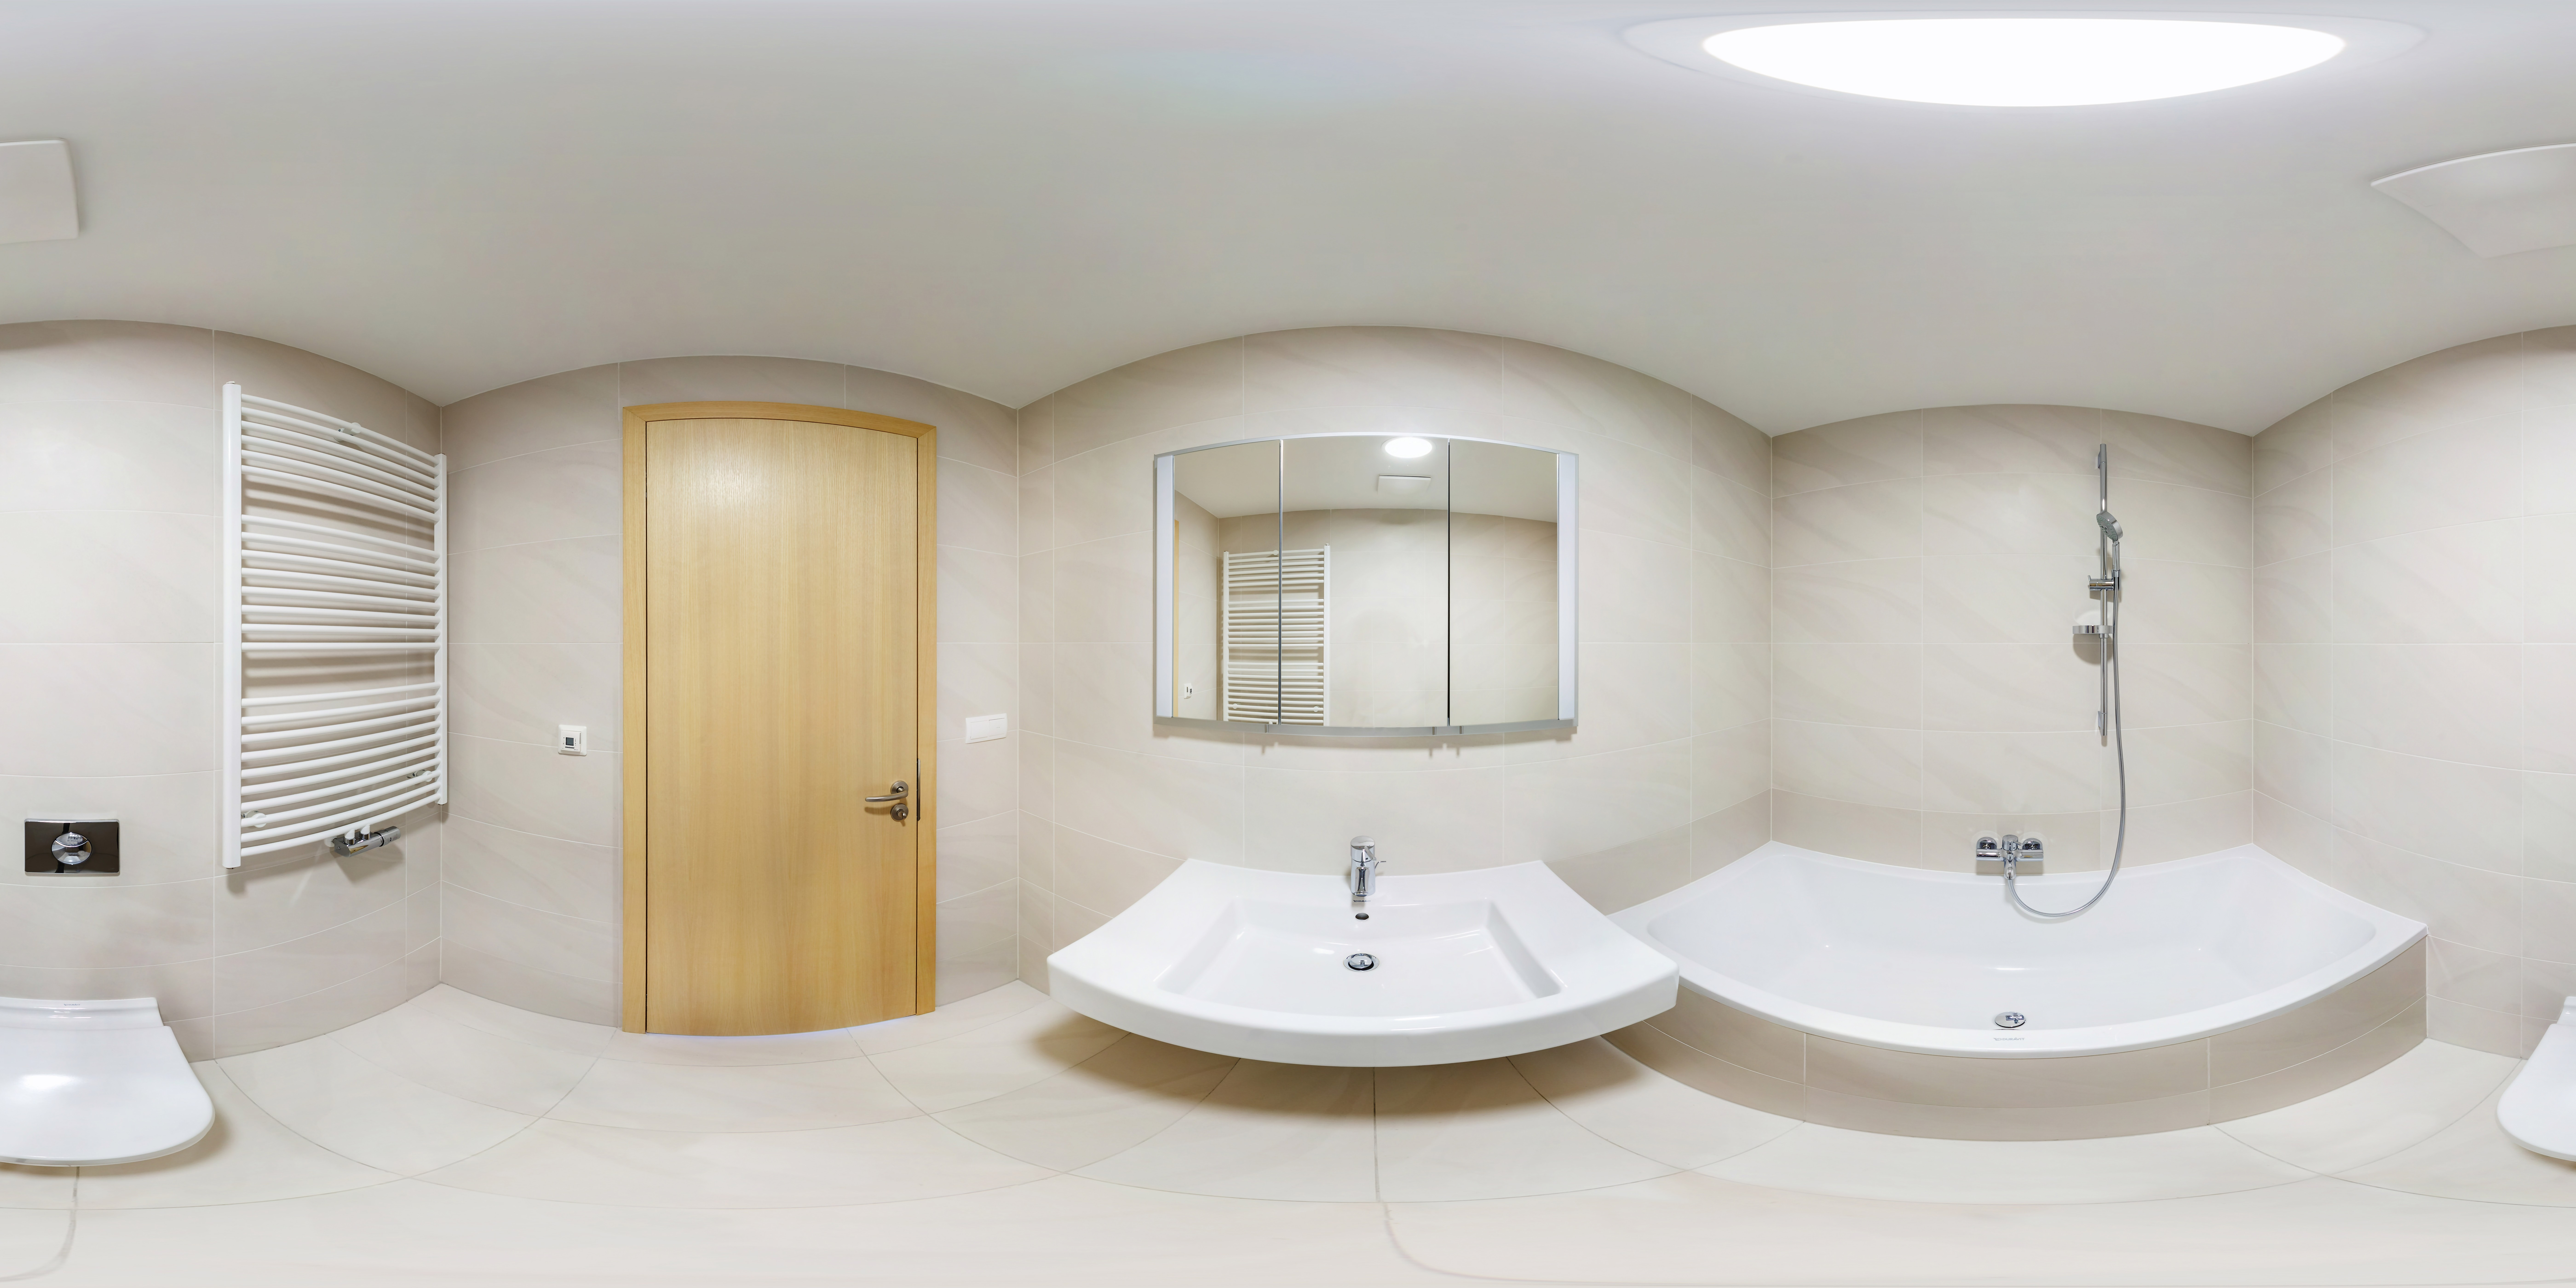 Affordable and Minimalist: Simple Modern Bathroom Design